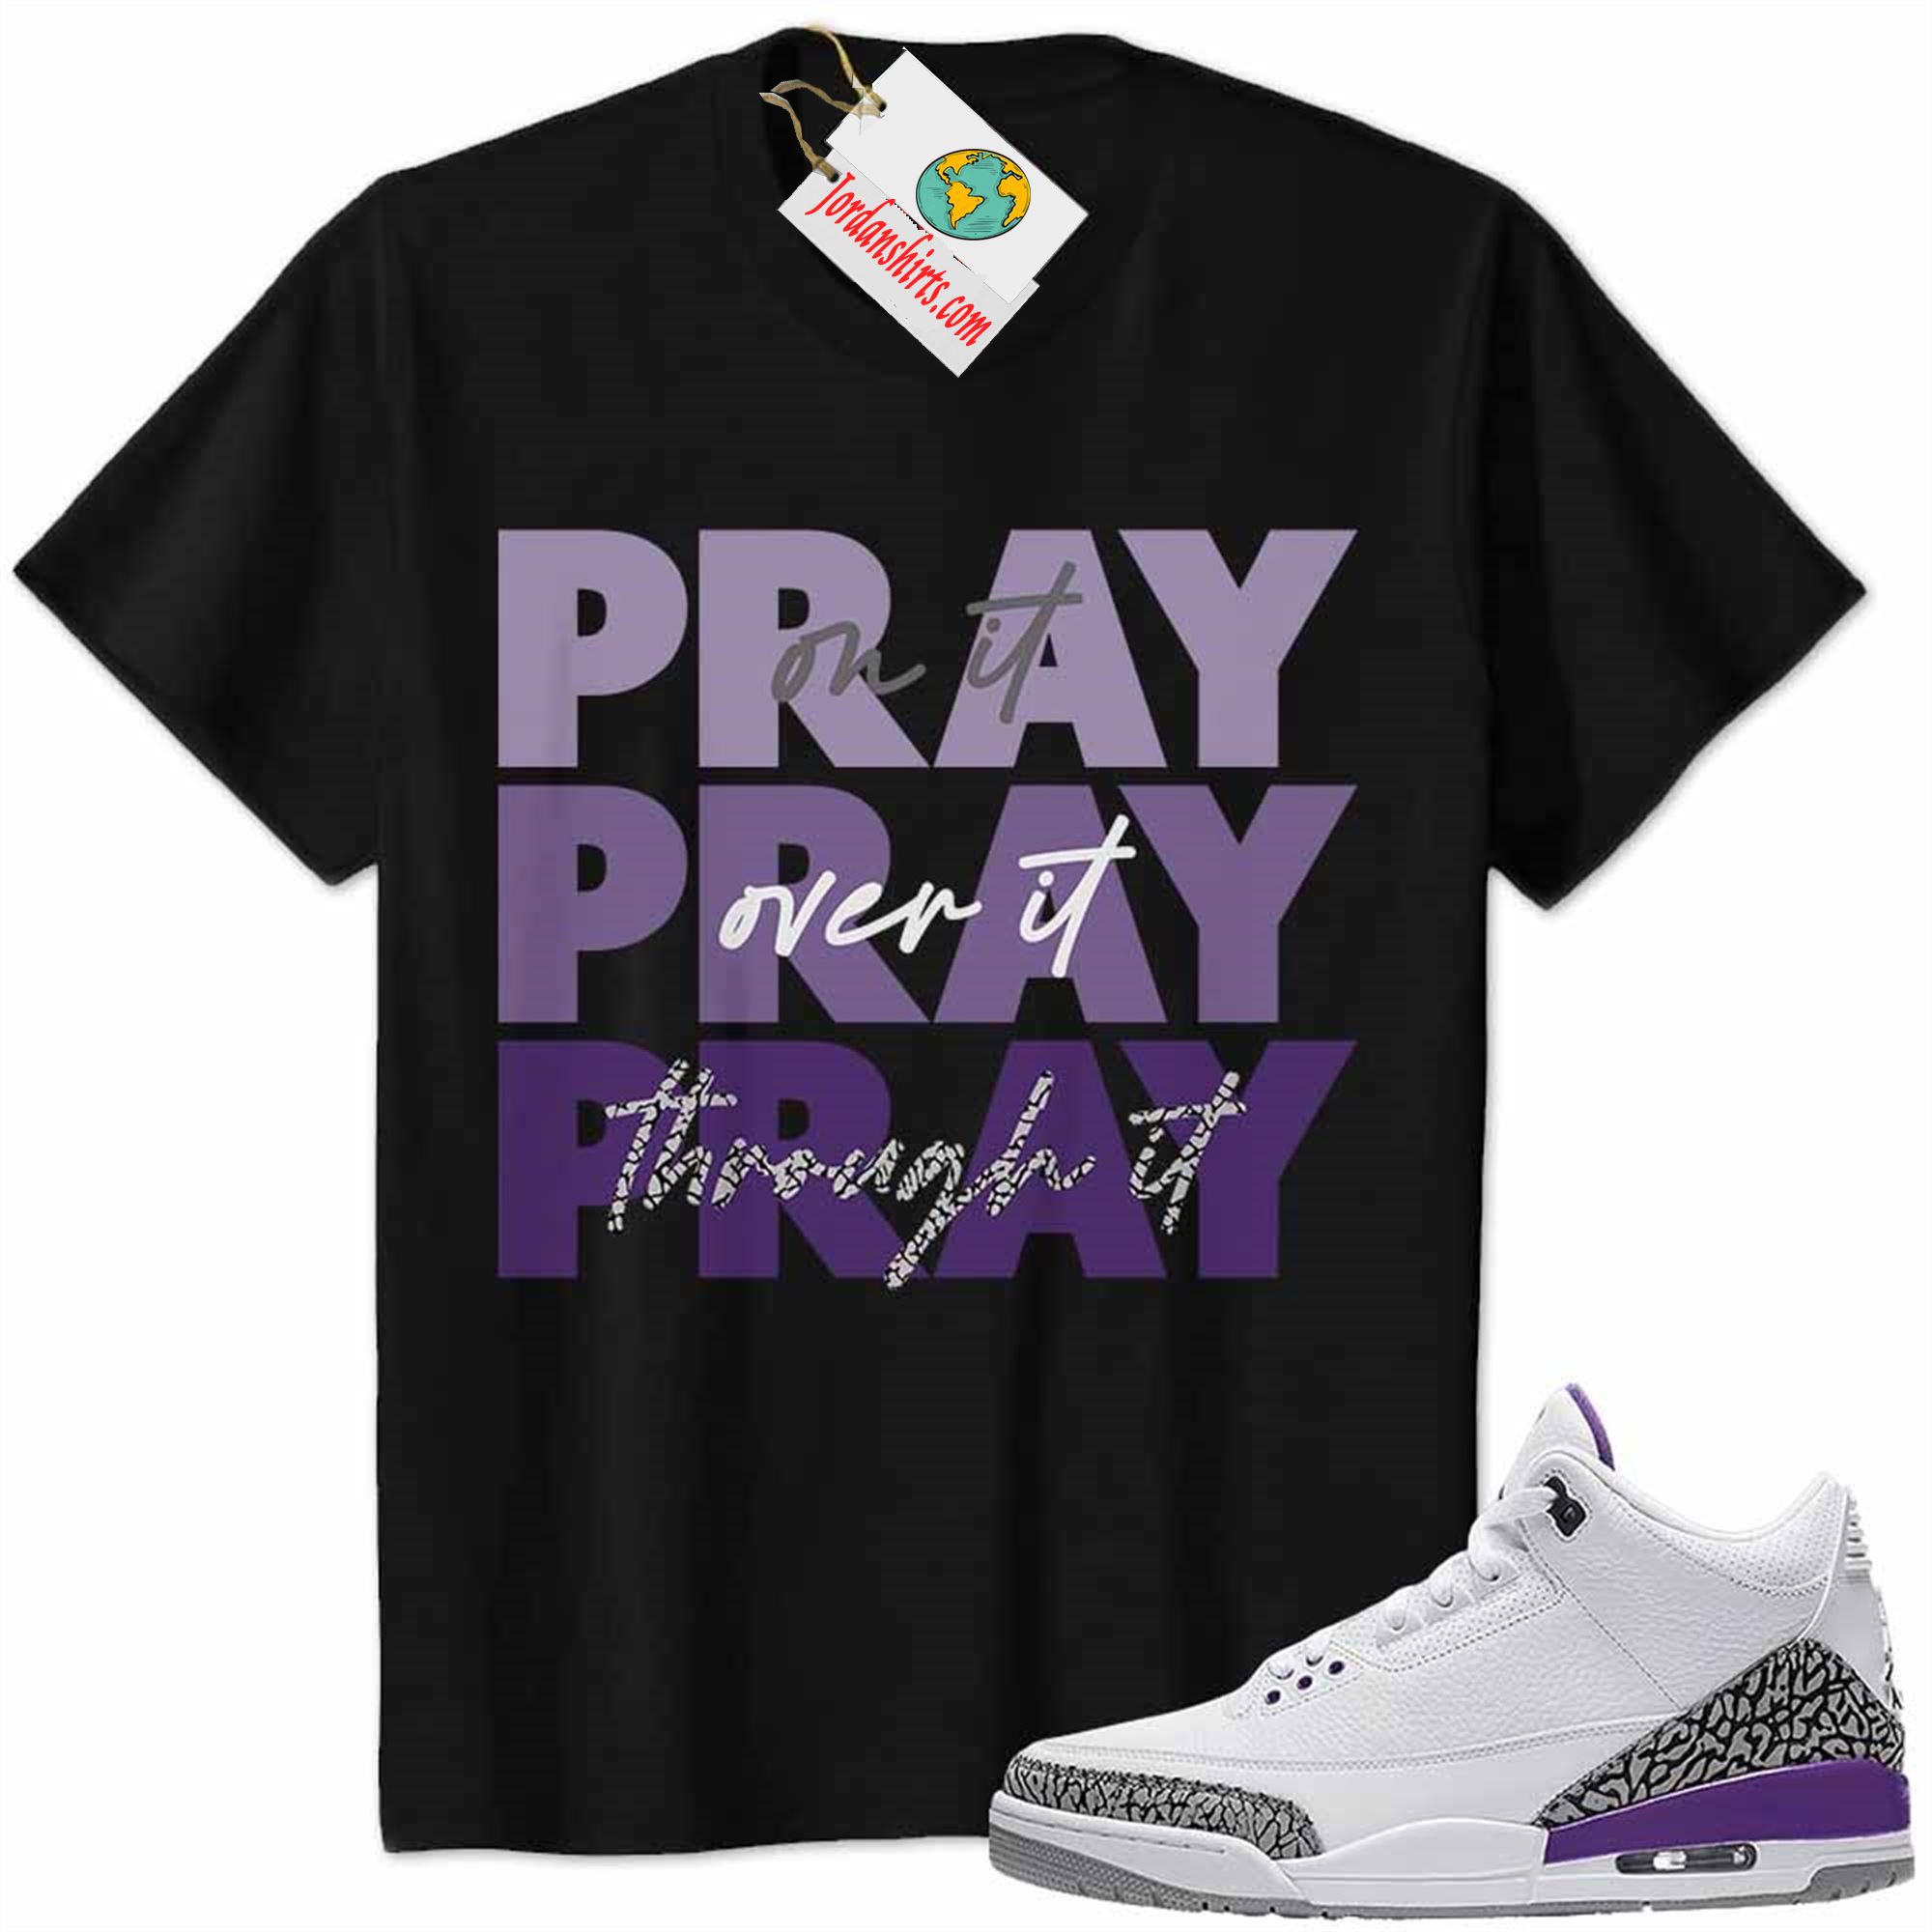 Jordan 3 Shirt, Jordan 3 Dark Iris Shirt Shirt Pray On It Pray Over It Pray Through It Black Full Size Up To 5xl